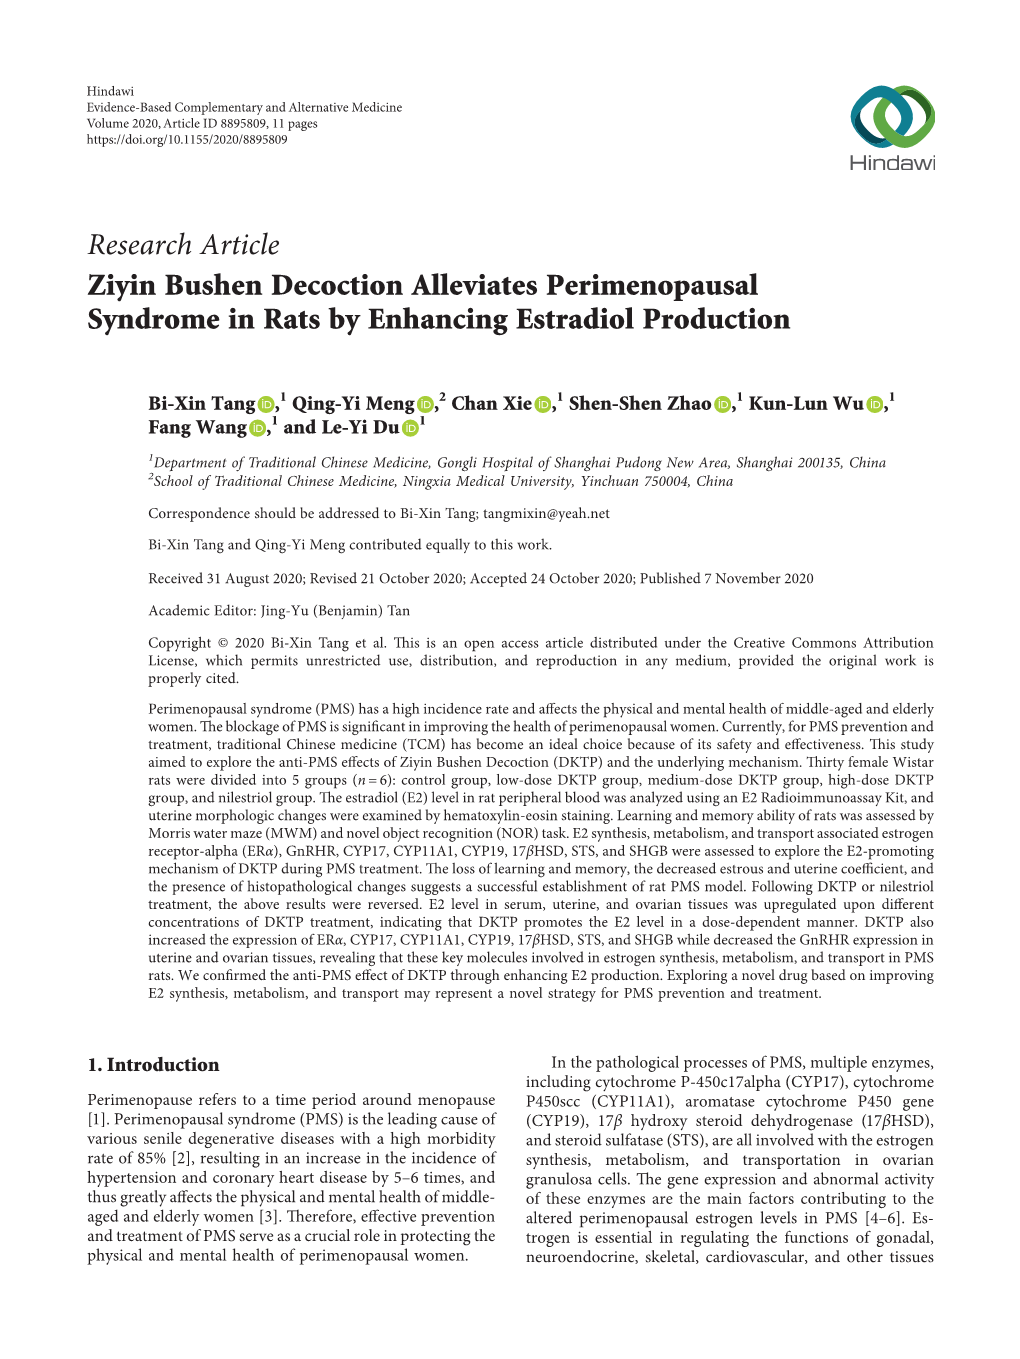 Ziyin Bushen Decoction Alleviates Perimenopausal Syndrome in Rats by Enhancing Estradiol Production